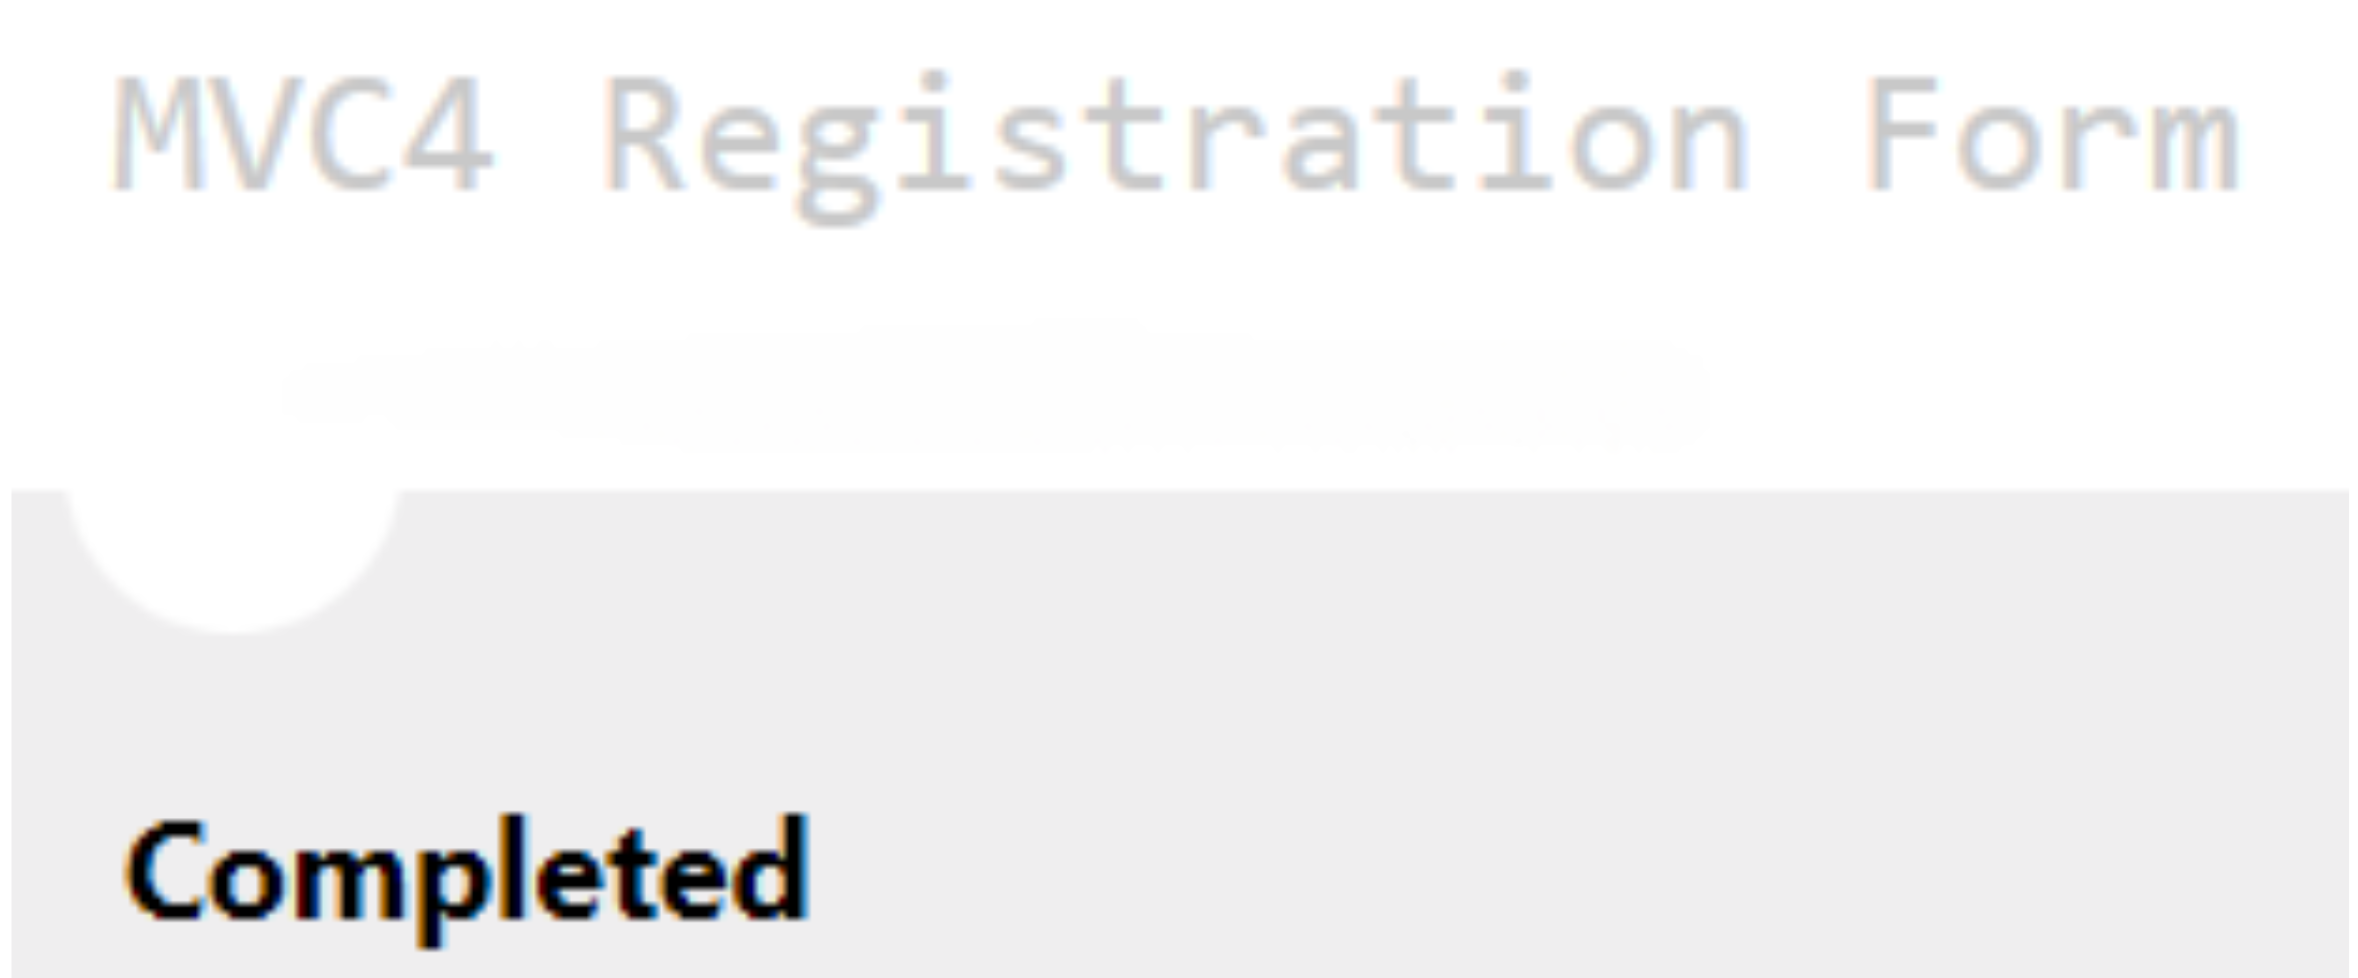 Validation of the registration form